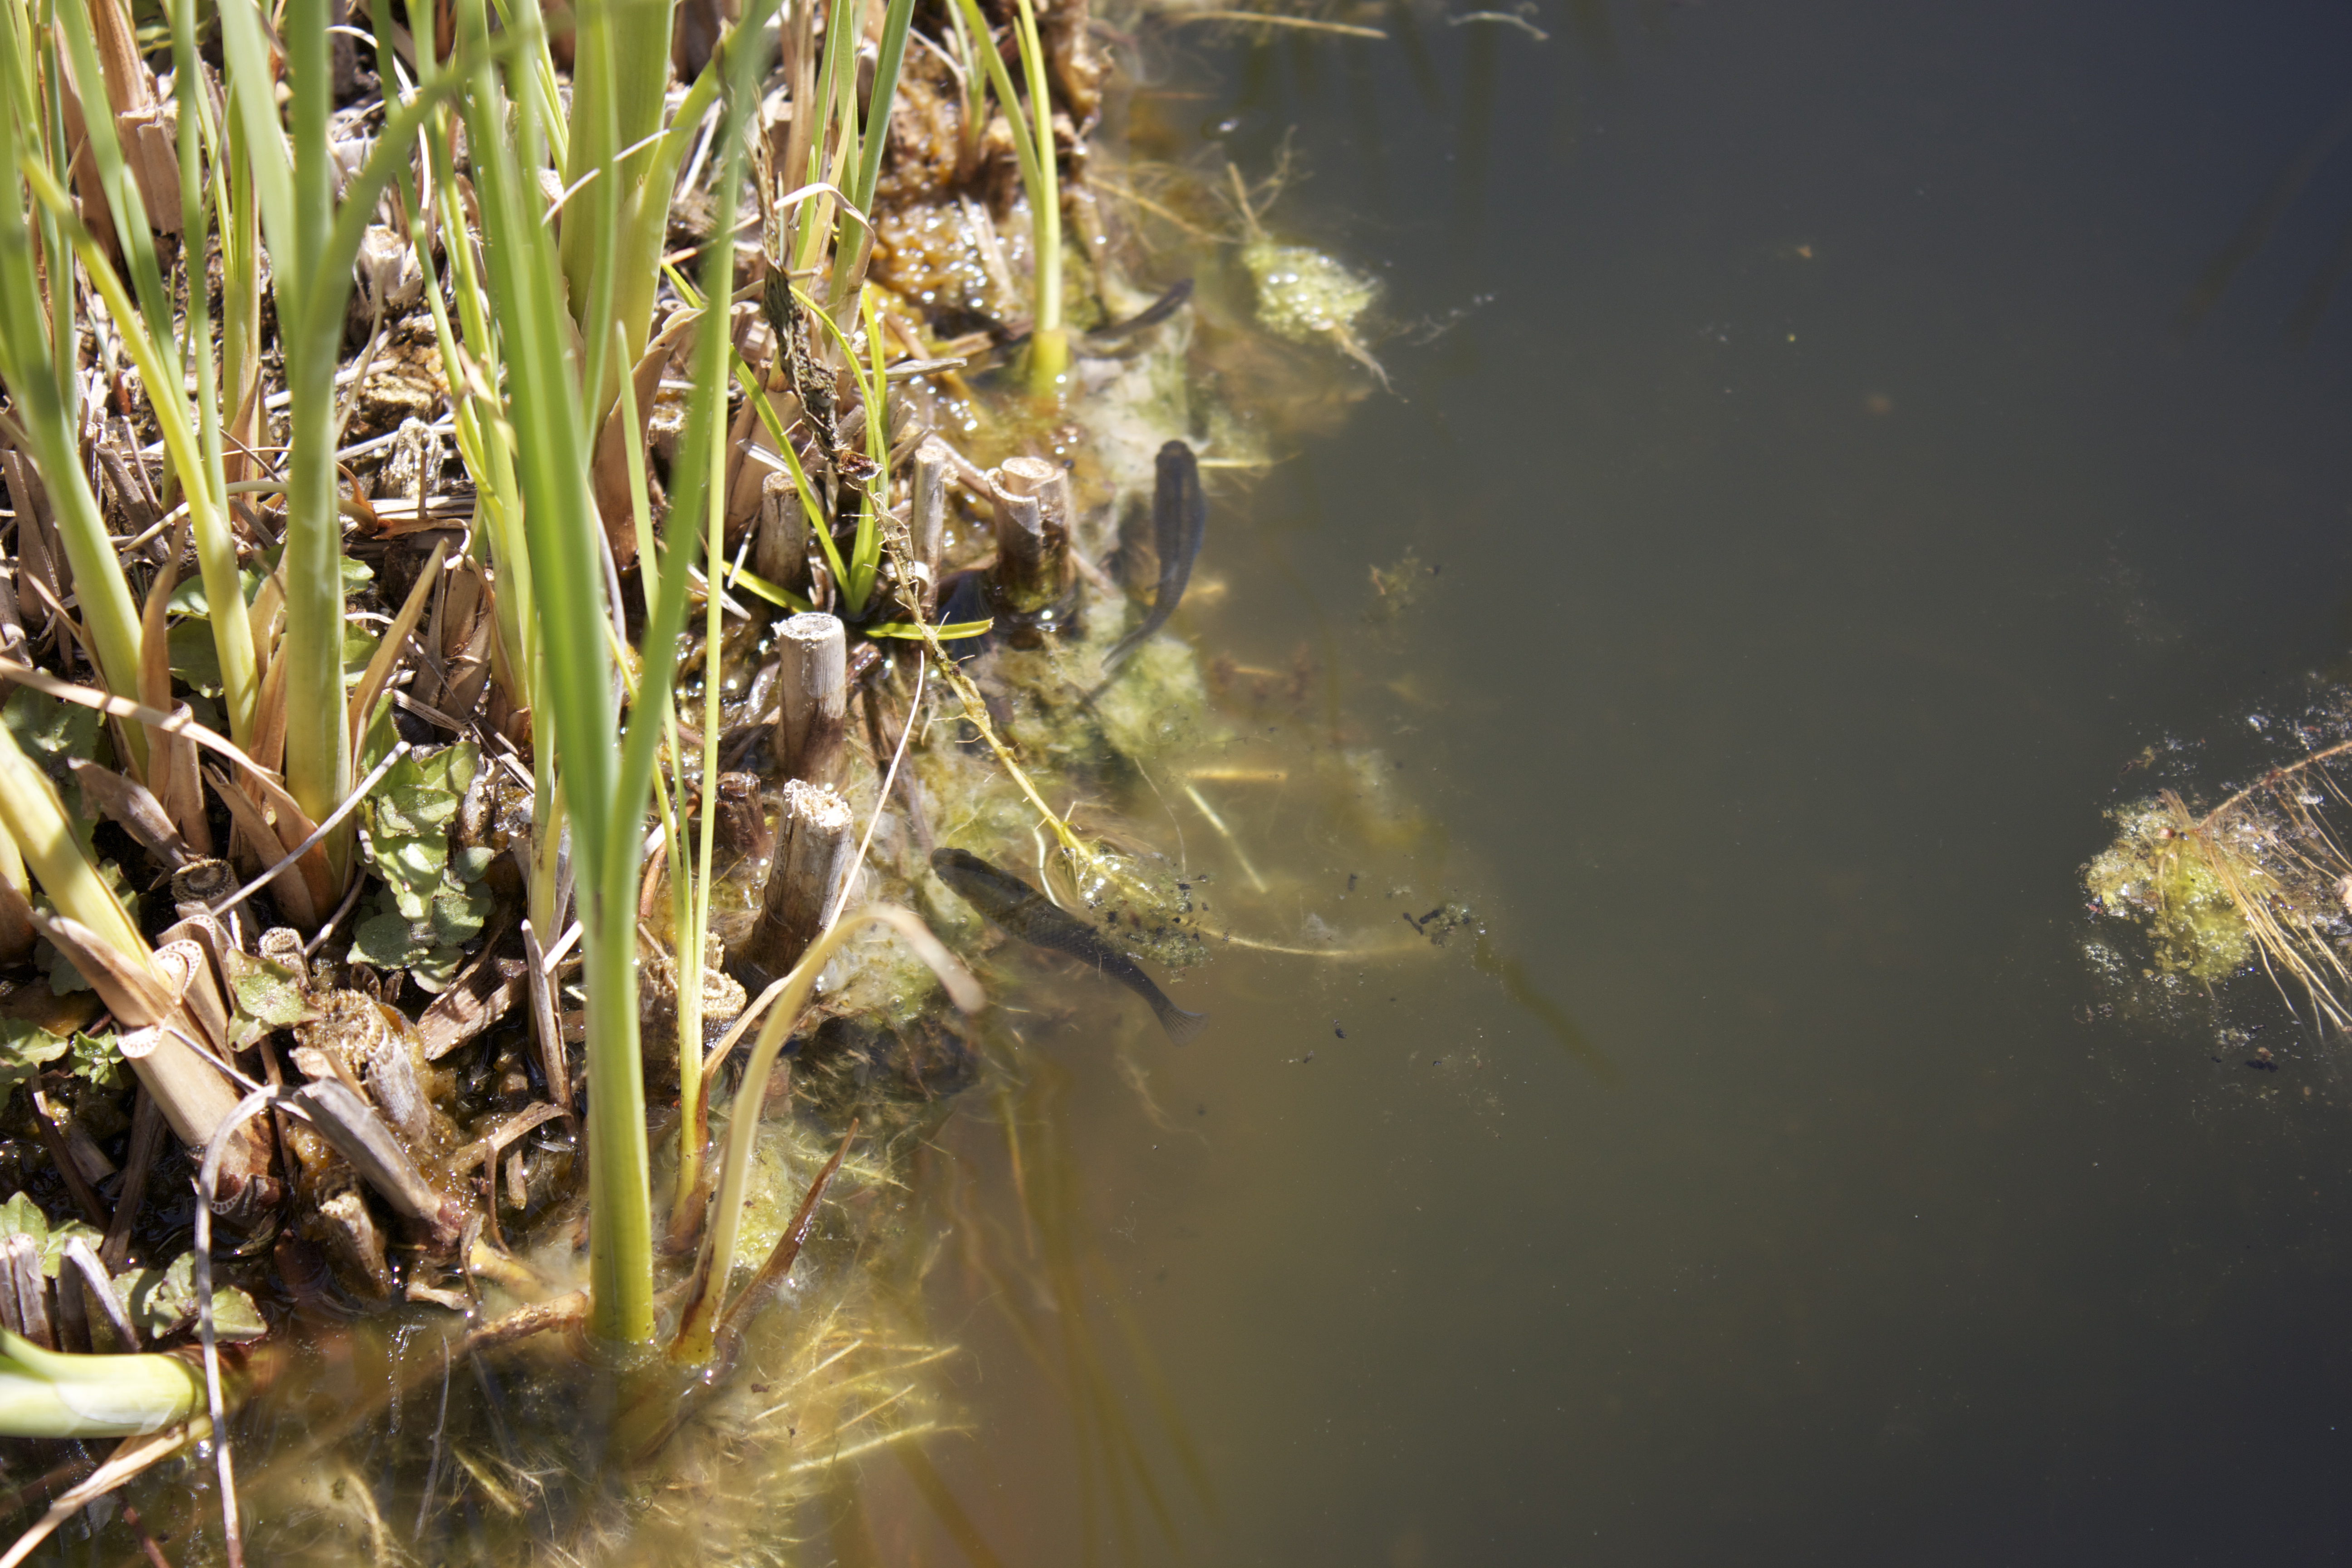 Little fish swim near plants at the edge of a murky pond.